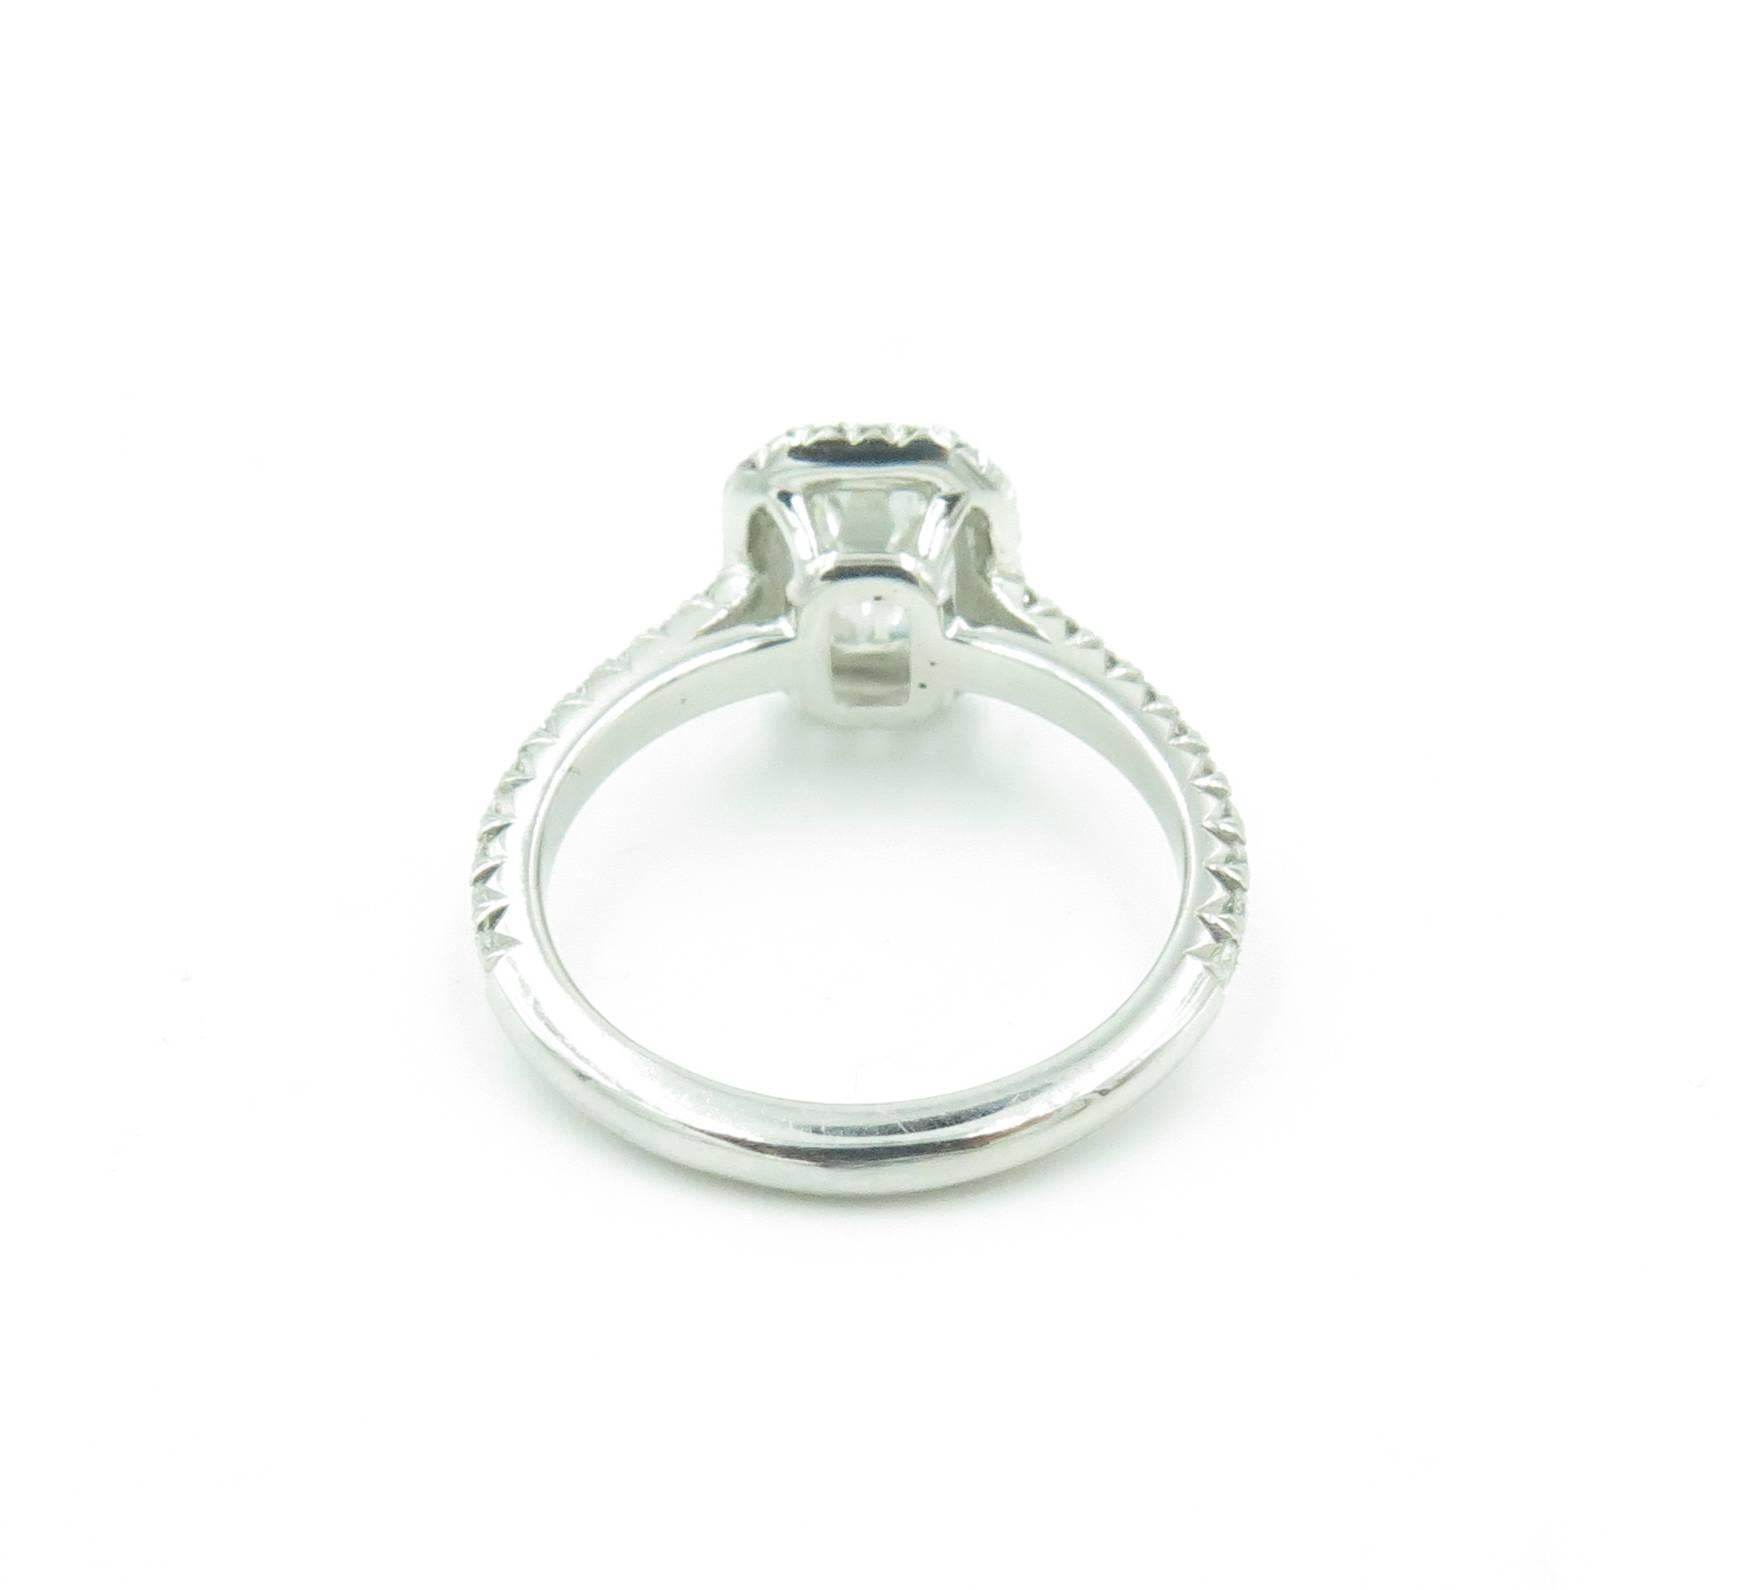 Gorgeous Emerald Cut Diamond Platinum Engagement Ring. 1